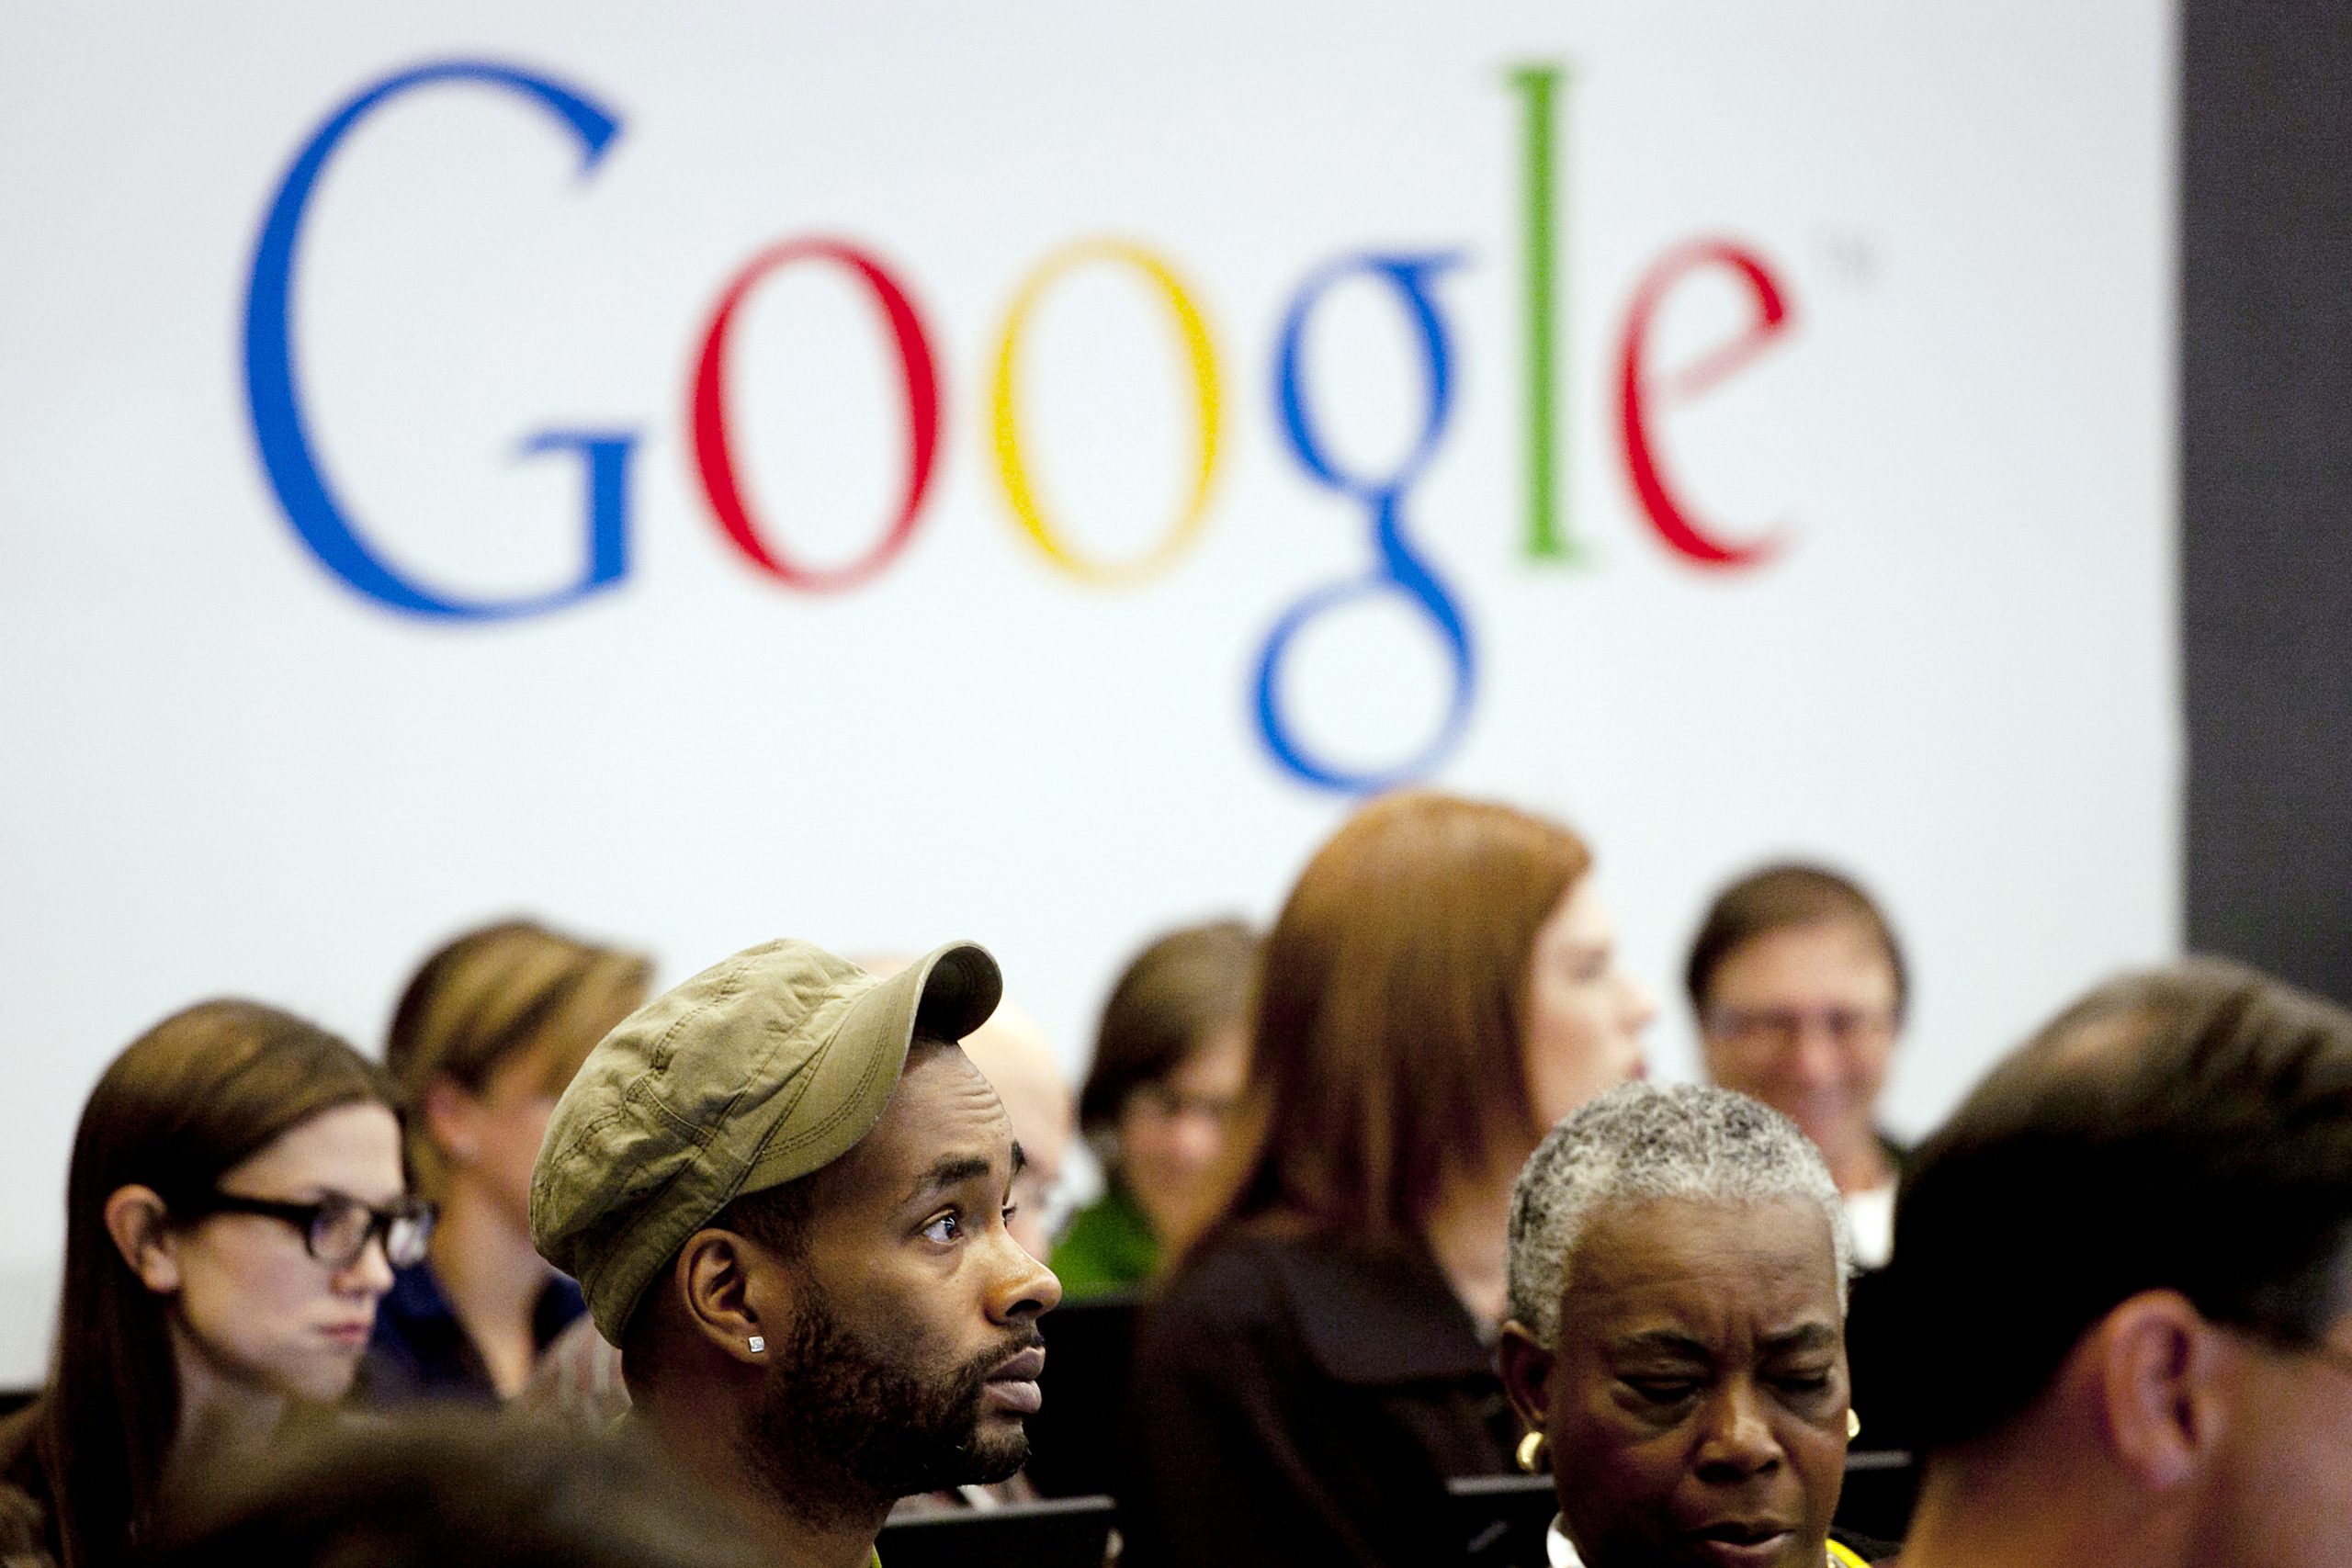 Google rolls back COVID-19 restrictions for US employees - Washington Examiner